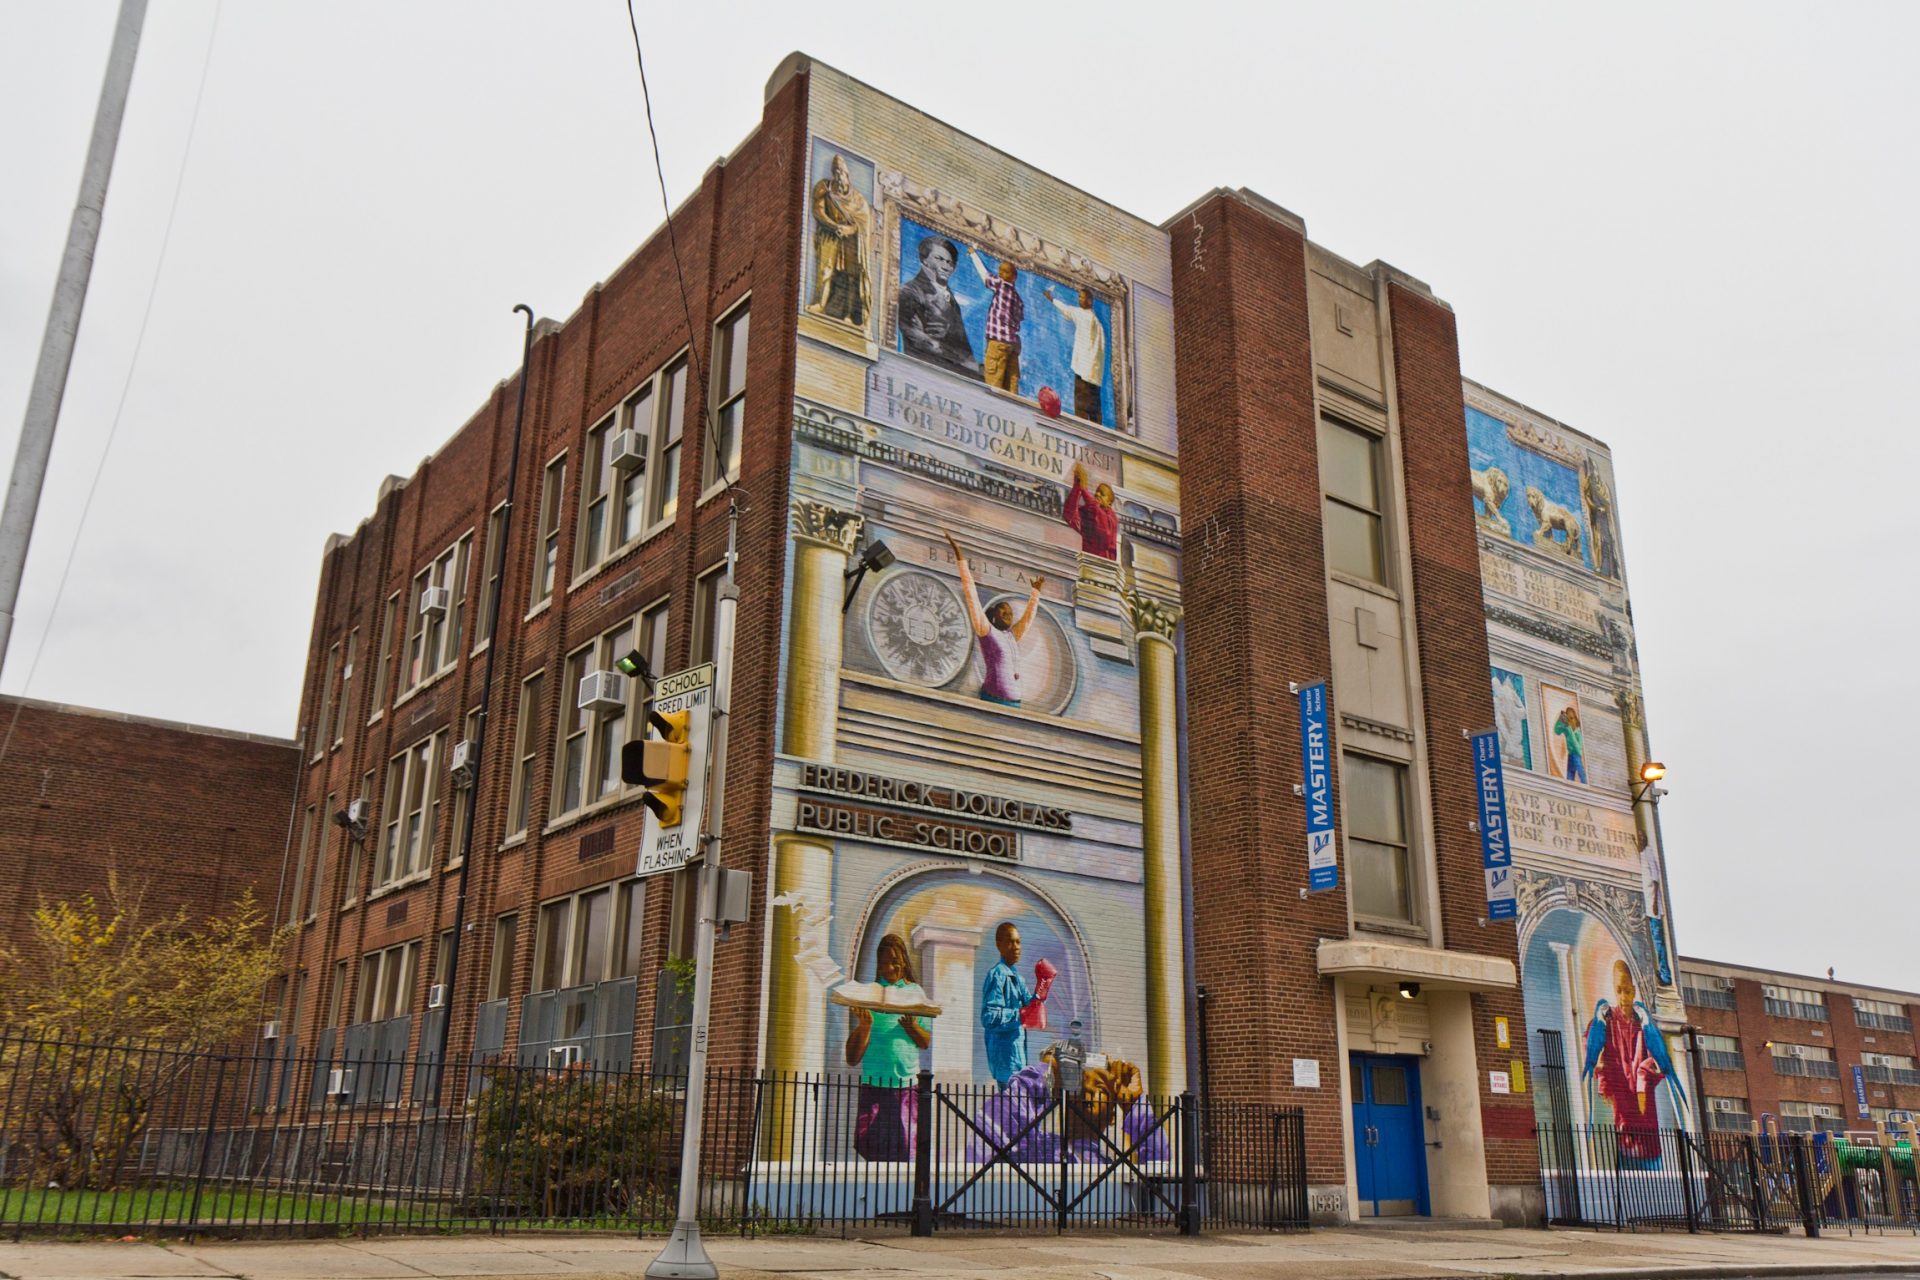 Mastery Frederick Douglass Elementary School in North Philadelphia.